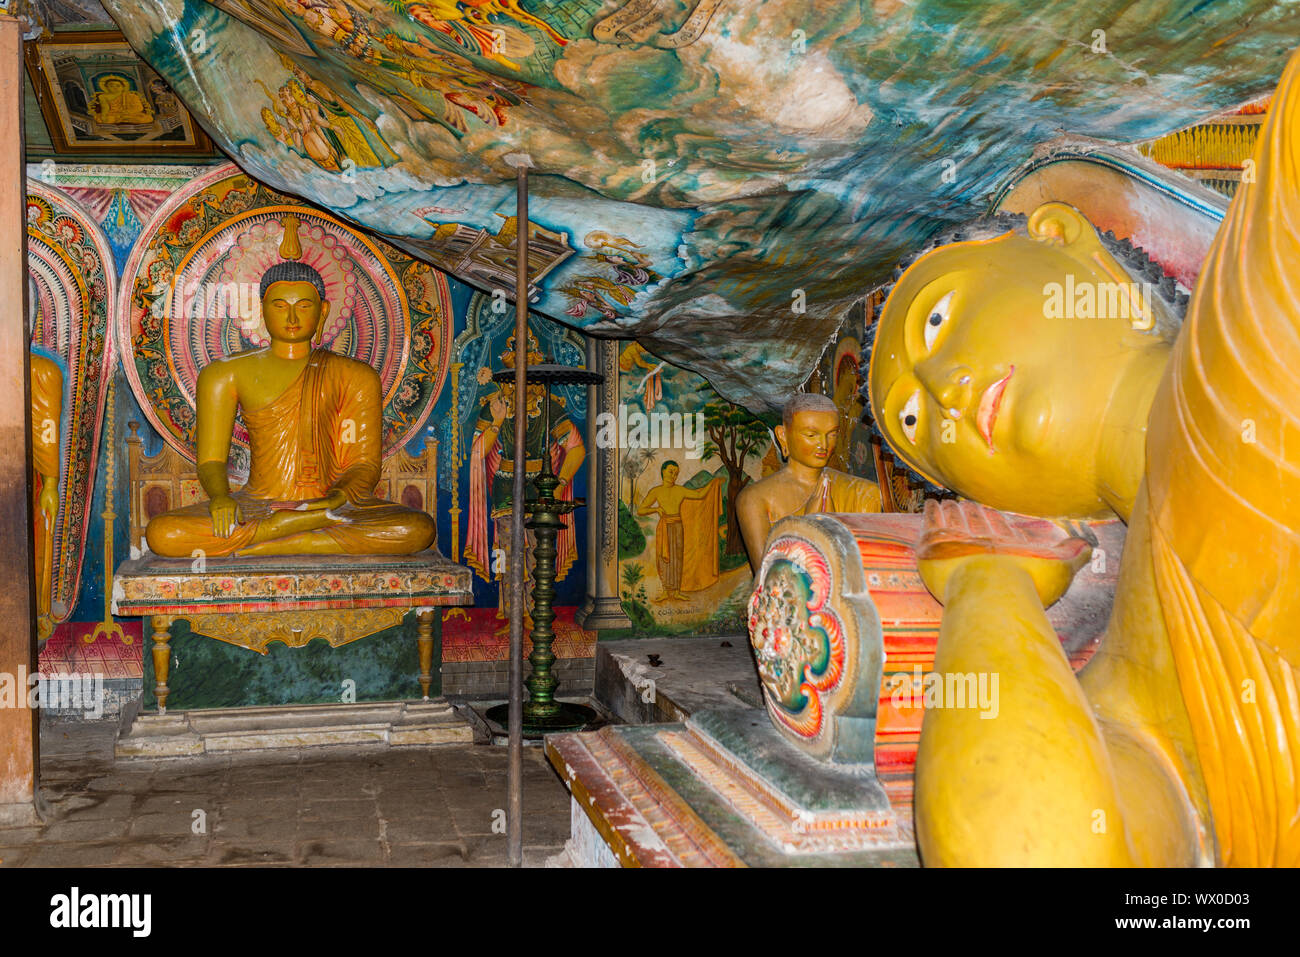 Mulkirigala Raja Maha Vihara es un antiguo templo budista en Sri Lanka Foto de stock